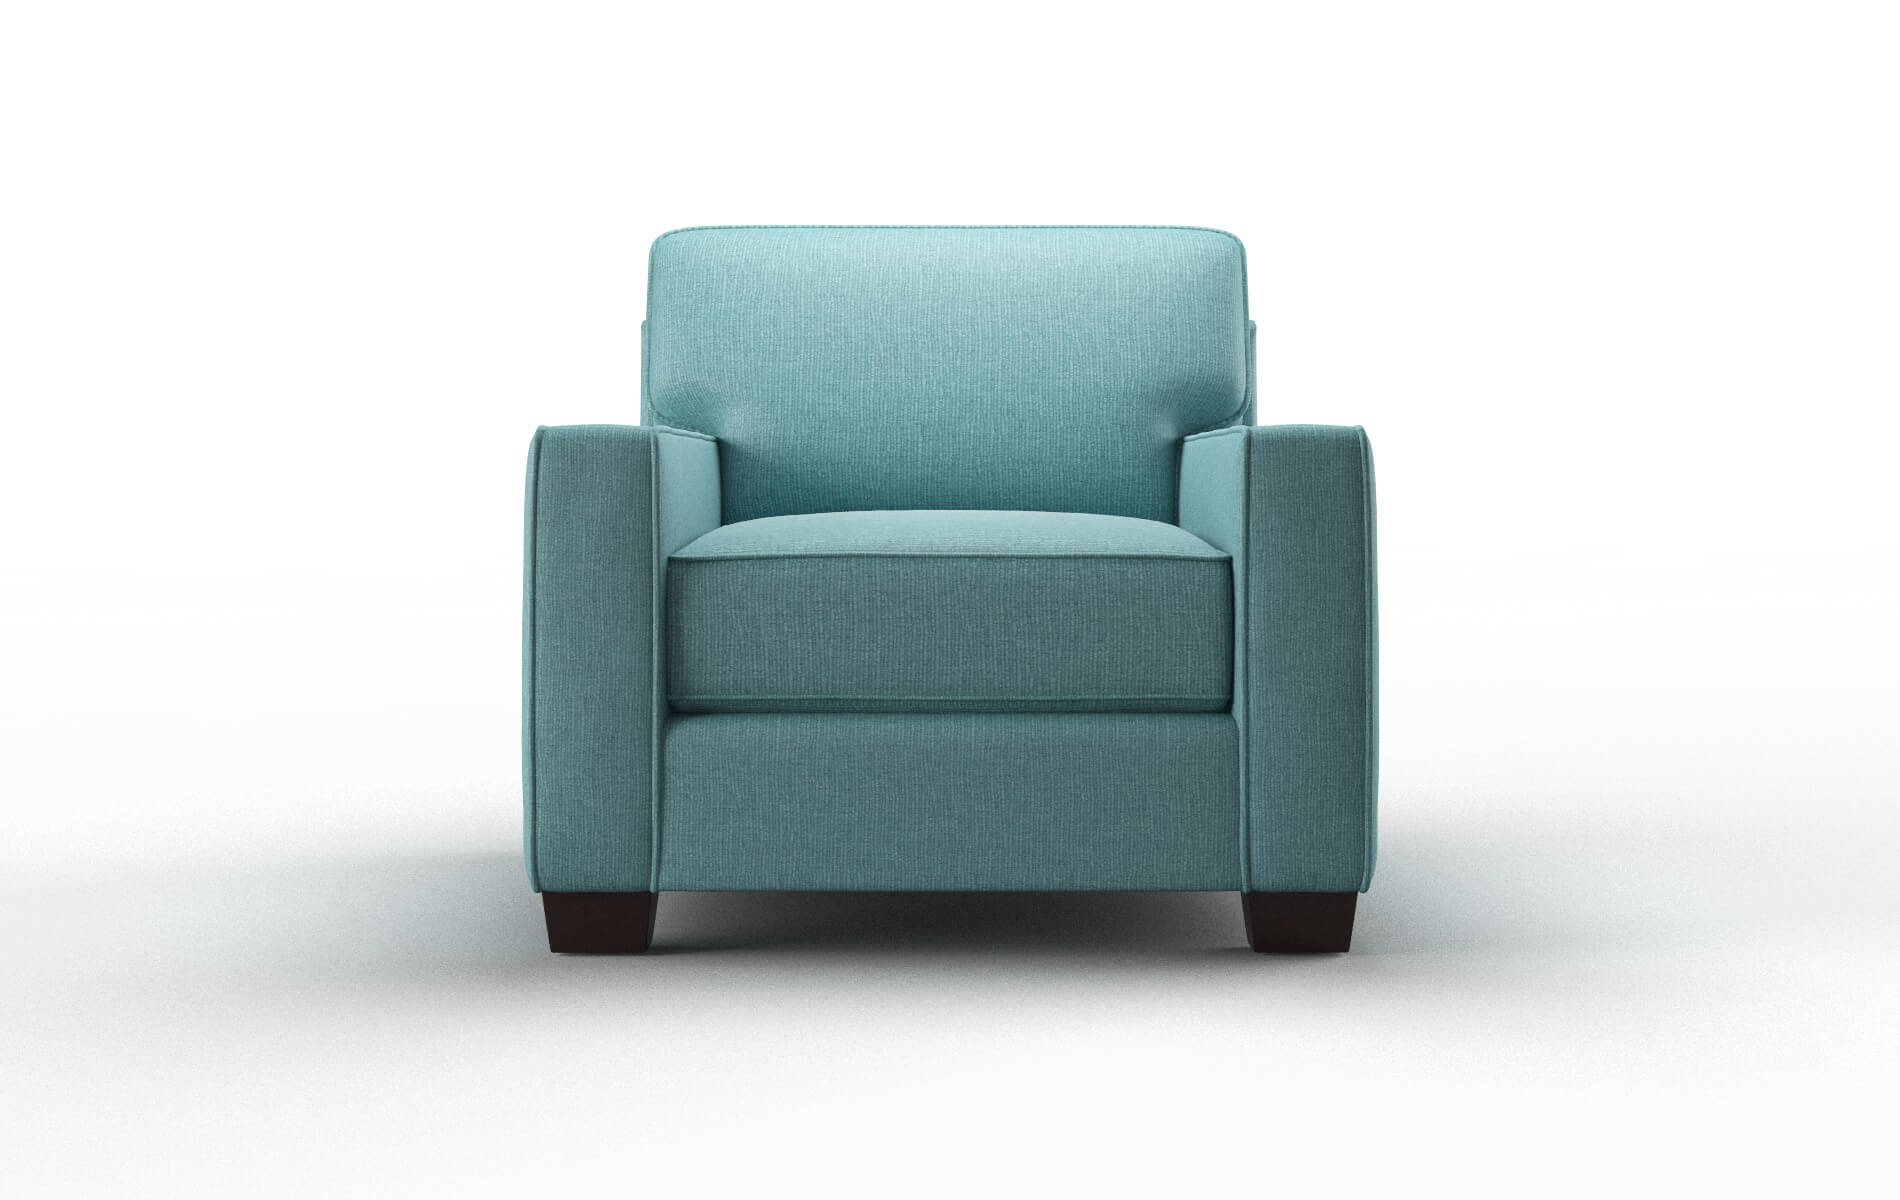 Chicago Parker Turquoise chair espresso legs